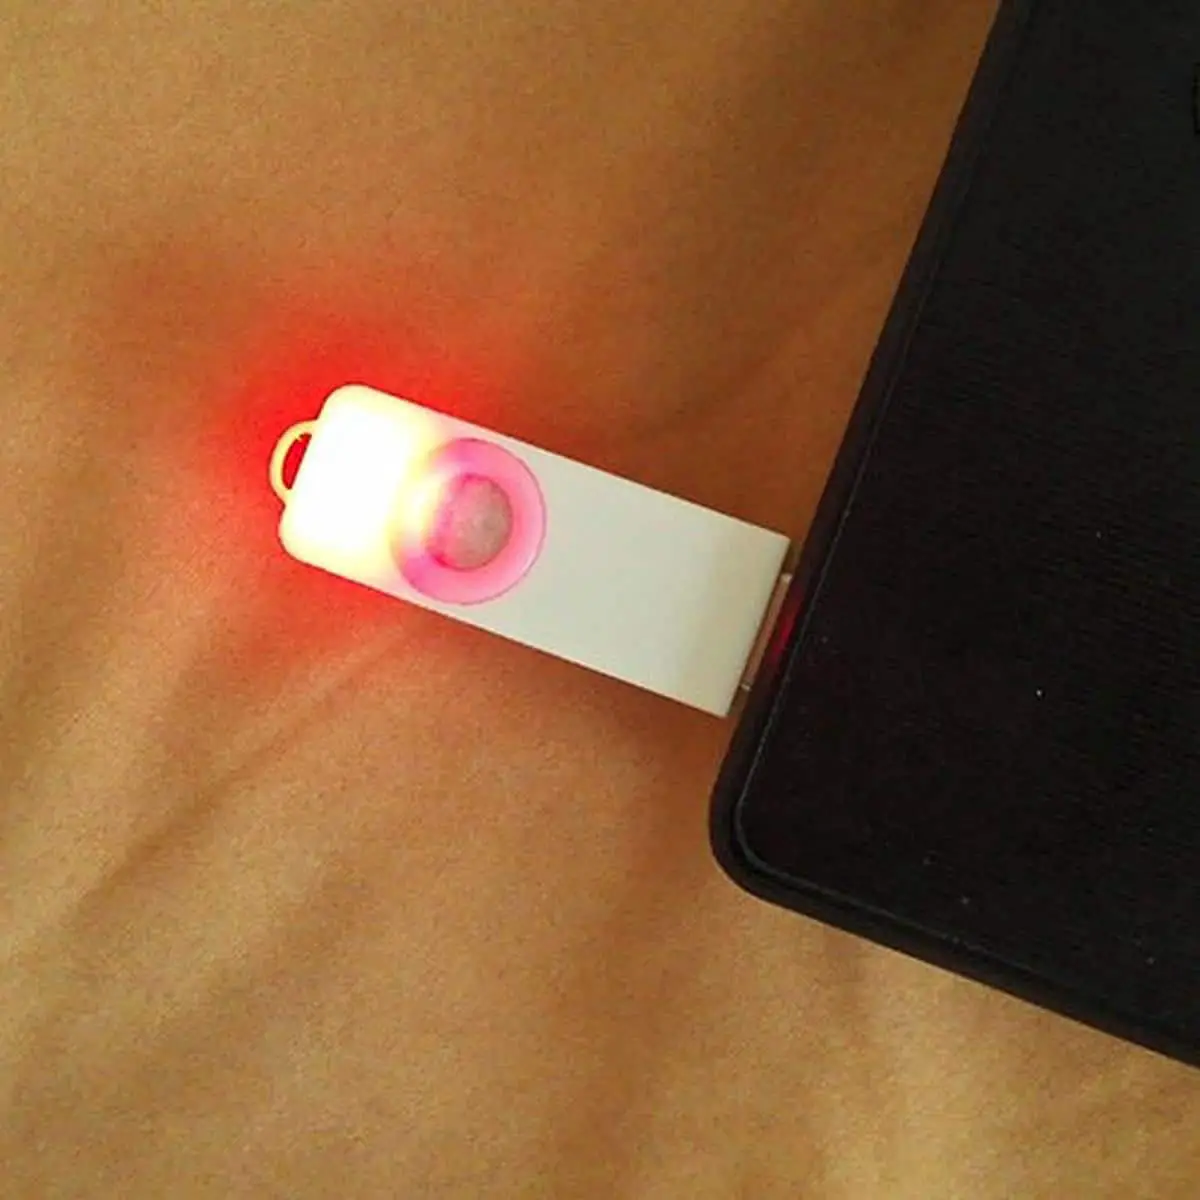 Lastnight USB Essential Oil Air Diffuser | Get These Tech Gadgets Via Amazon Prime